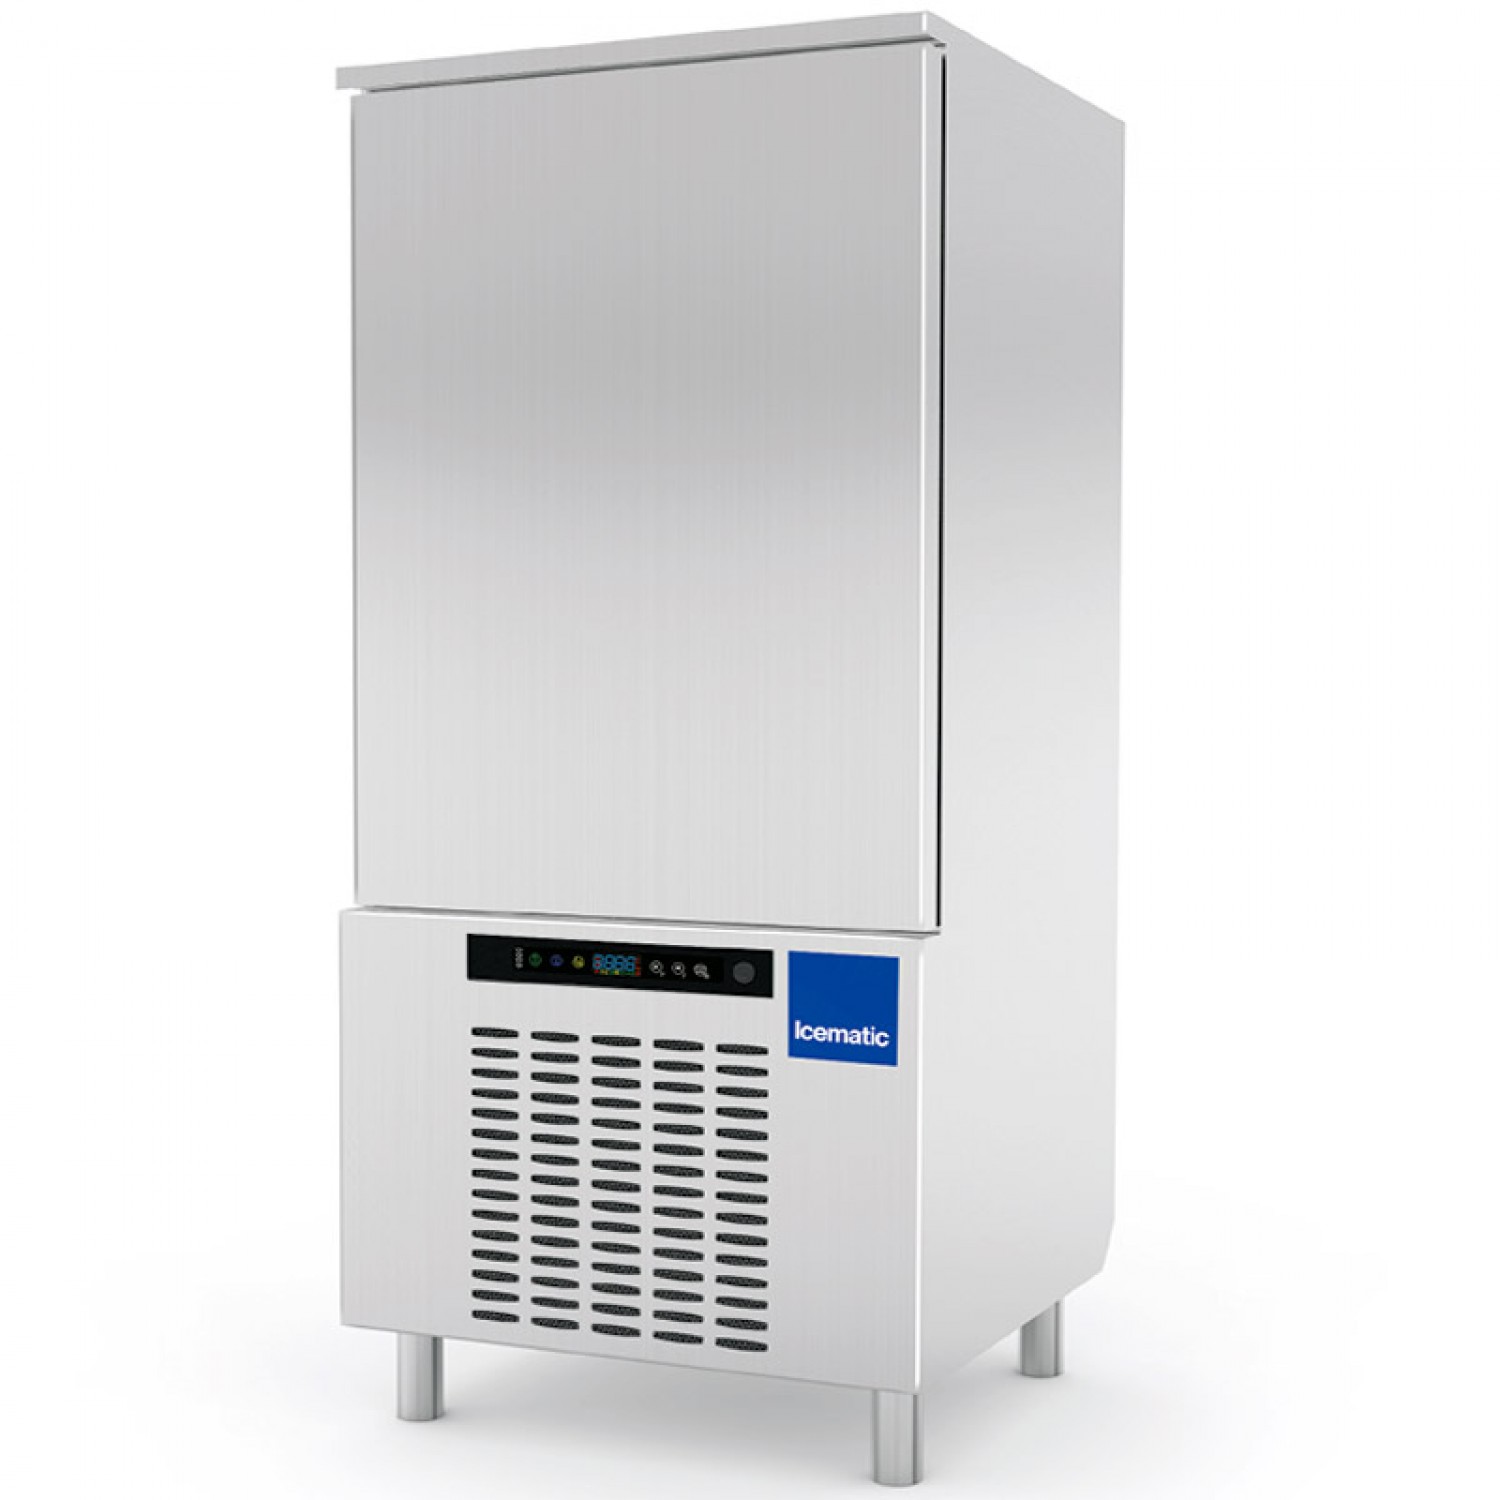 Blast Chiller – Shock Freezer ST15.40 ICEMATIC